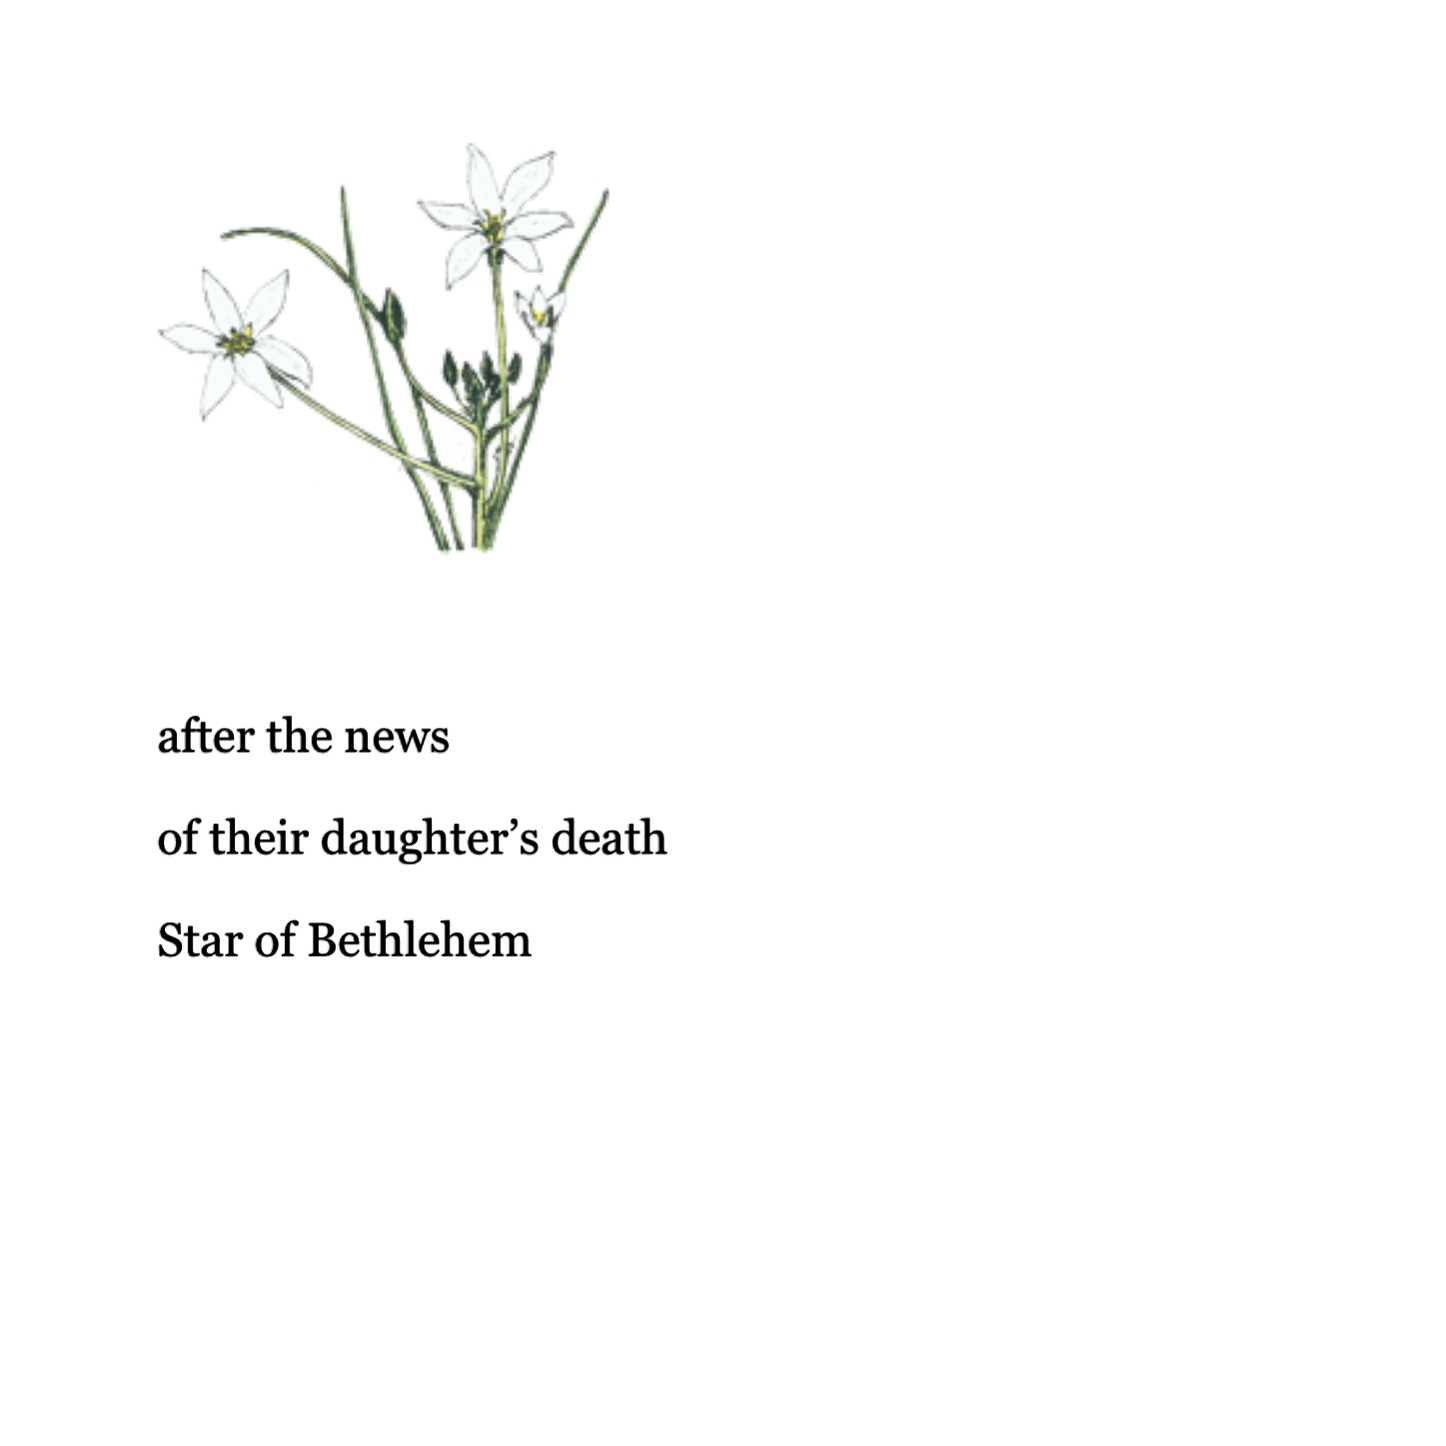 Flower remedies poetry Paul Conneally Starof Bethlehem